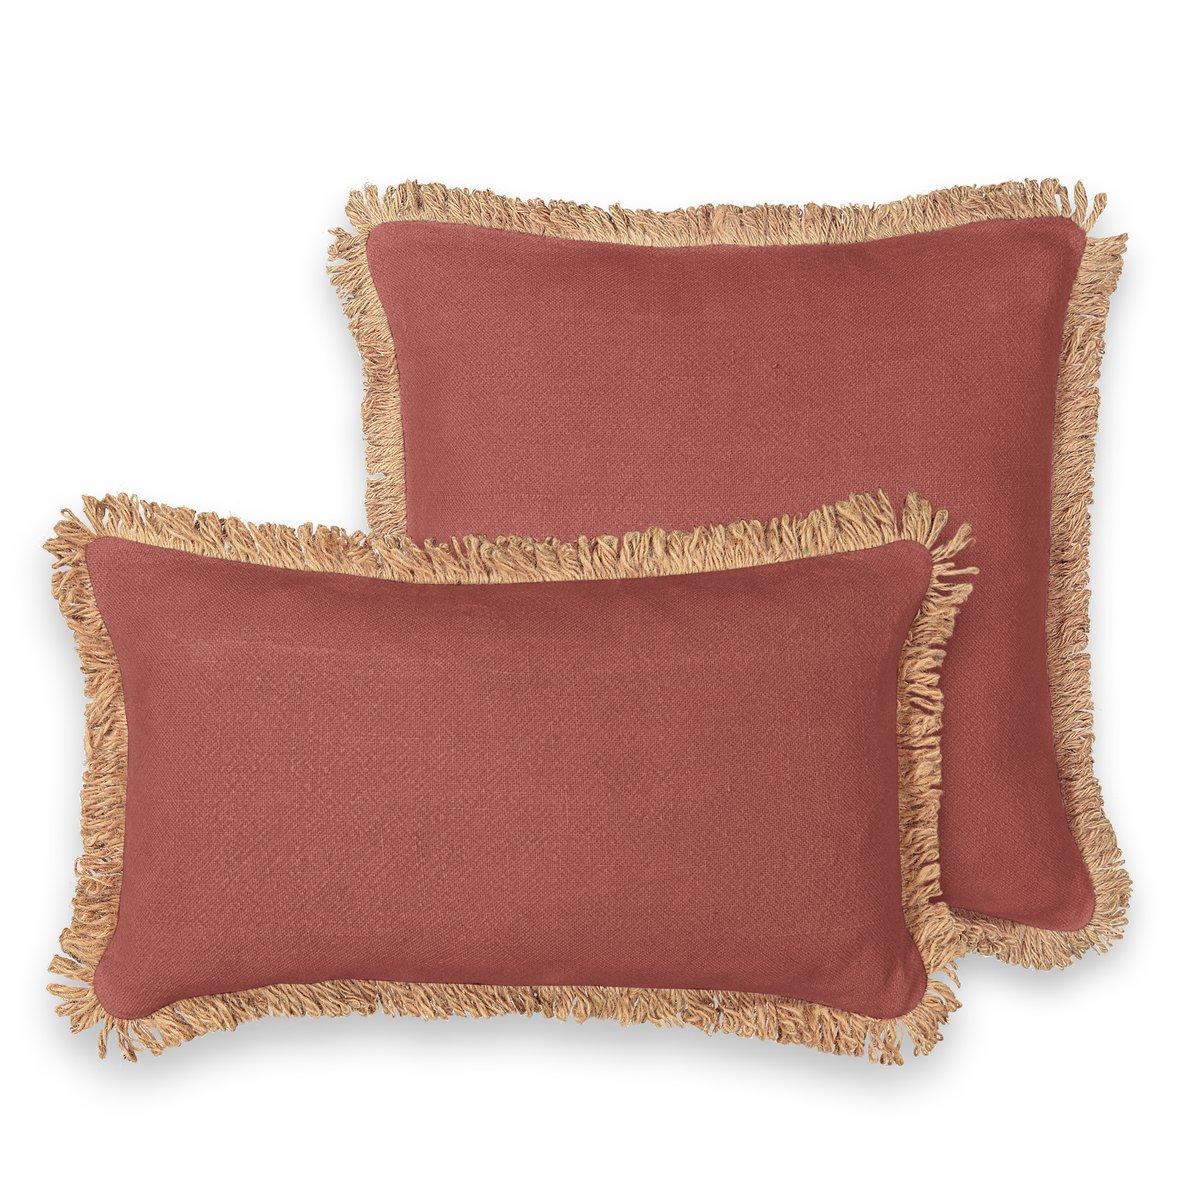 Чехол La Redoute На подушку из джута Jutty 50 x 30 см красный, размер 50 x 30 см - фото 3